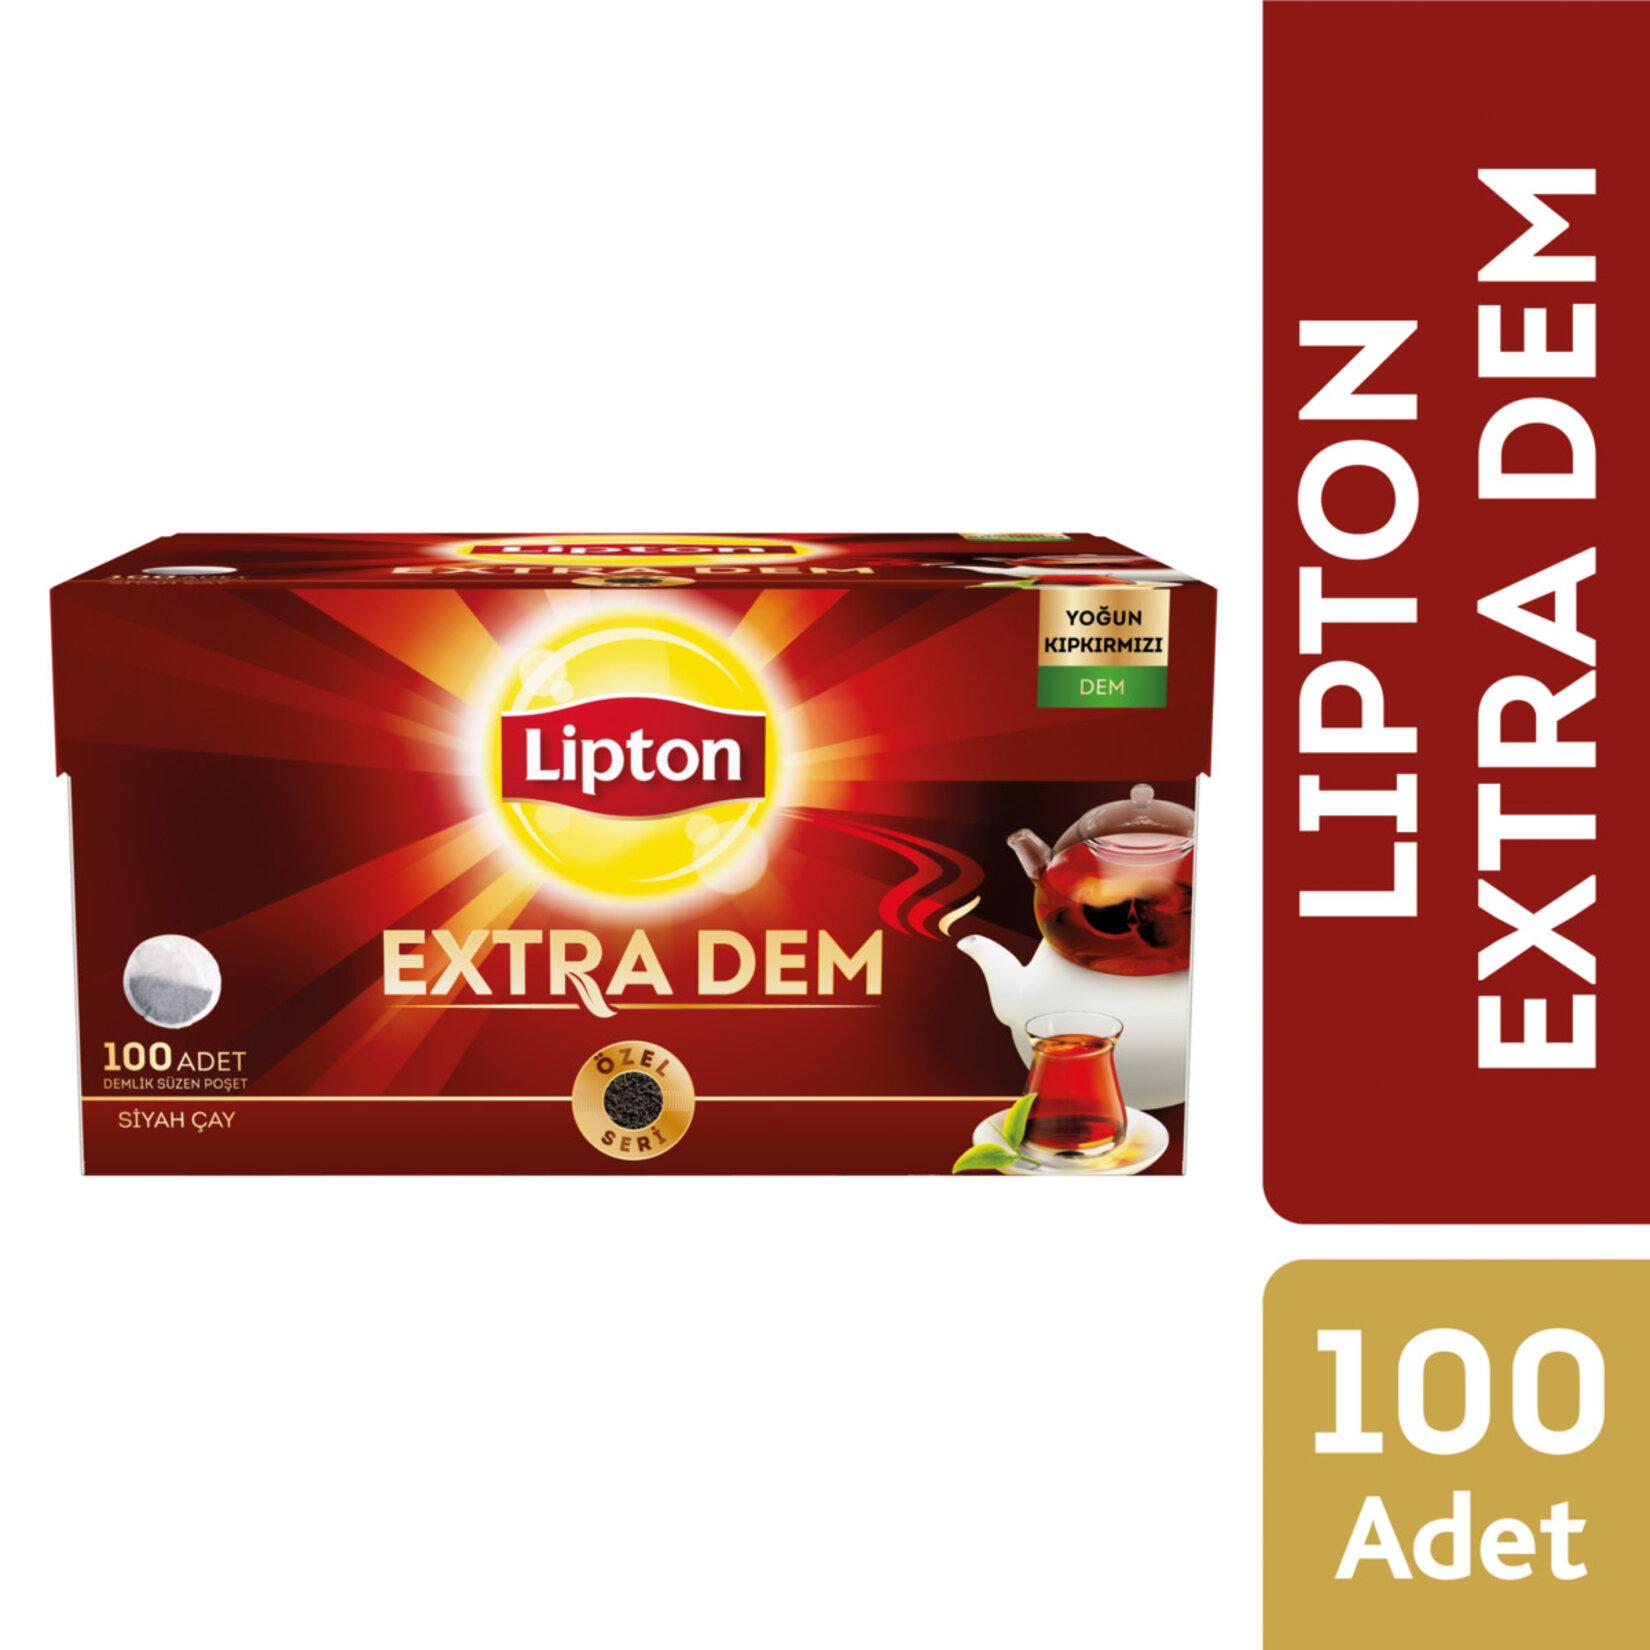 Lipton Extra Dem Demlik Poşet Siyah Çay 100'lü 4 Paket